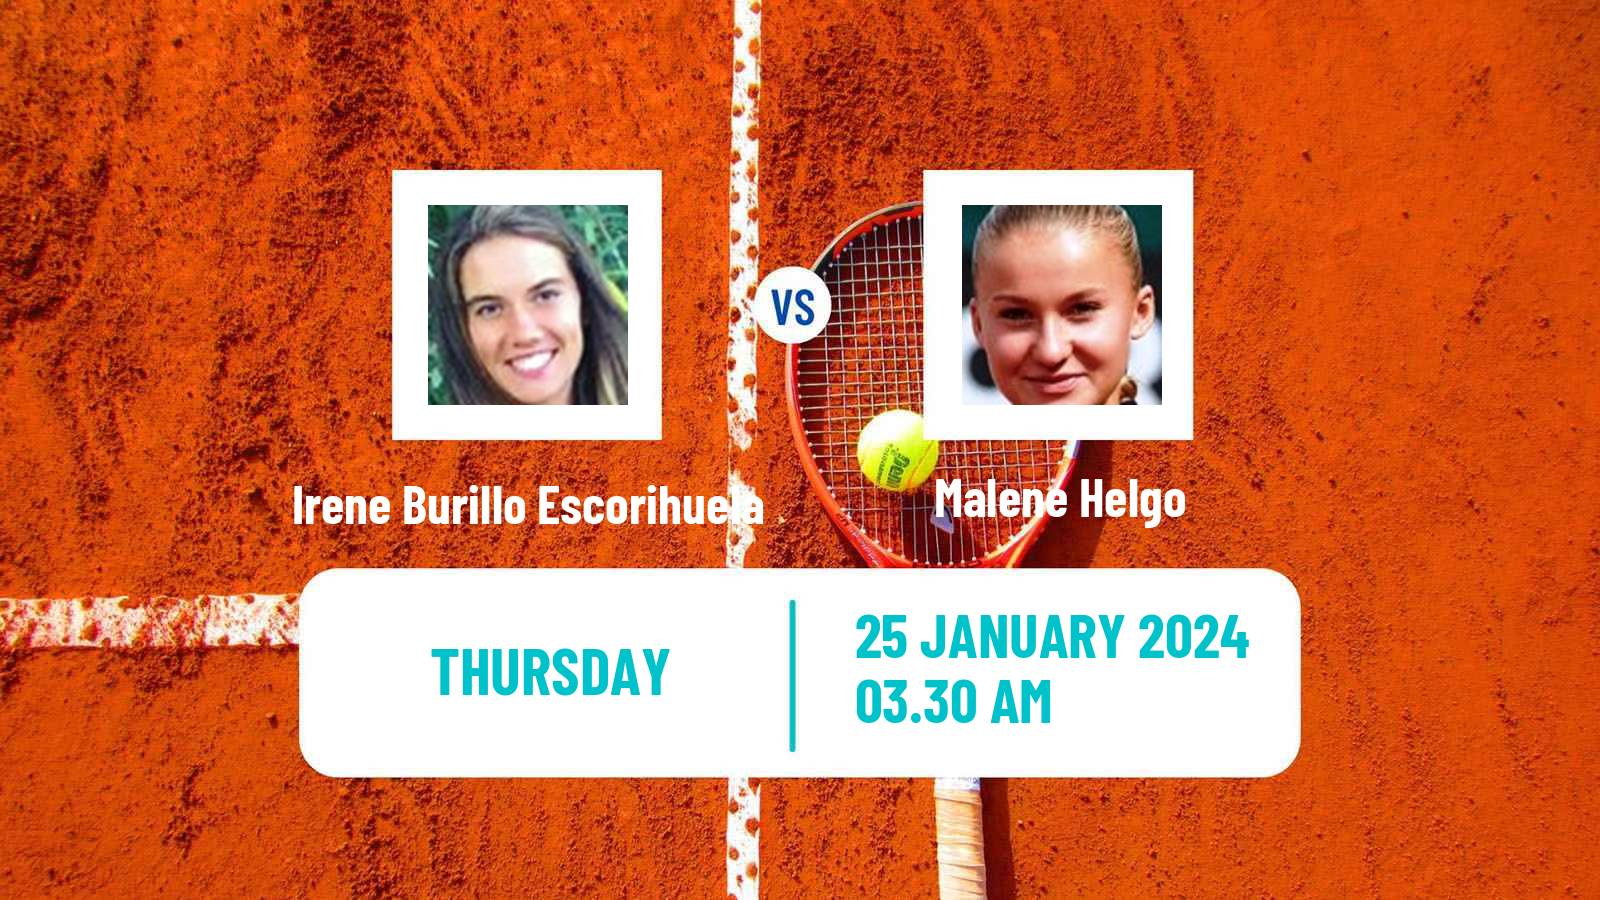 Tennis ITF W35 Monastir 2 Women Irene Burillo Escorihuela - Malene Helgo